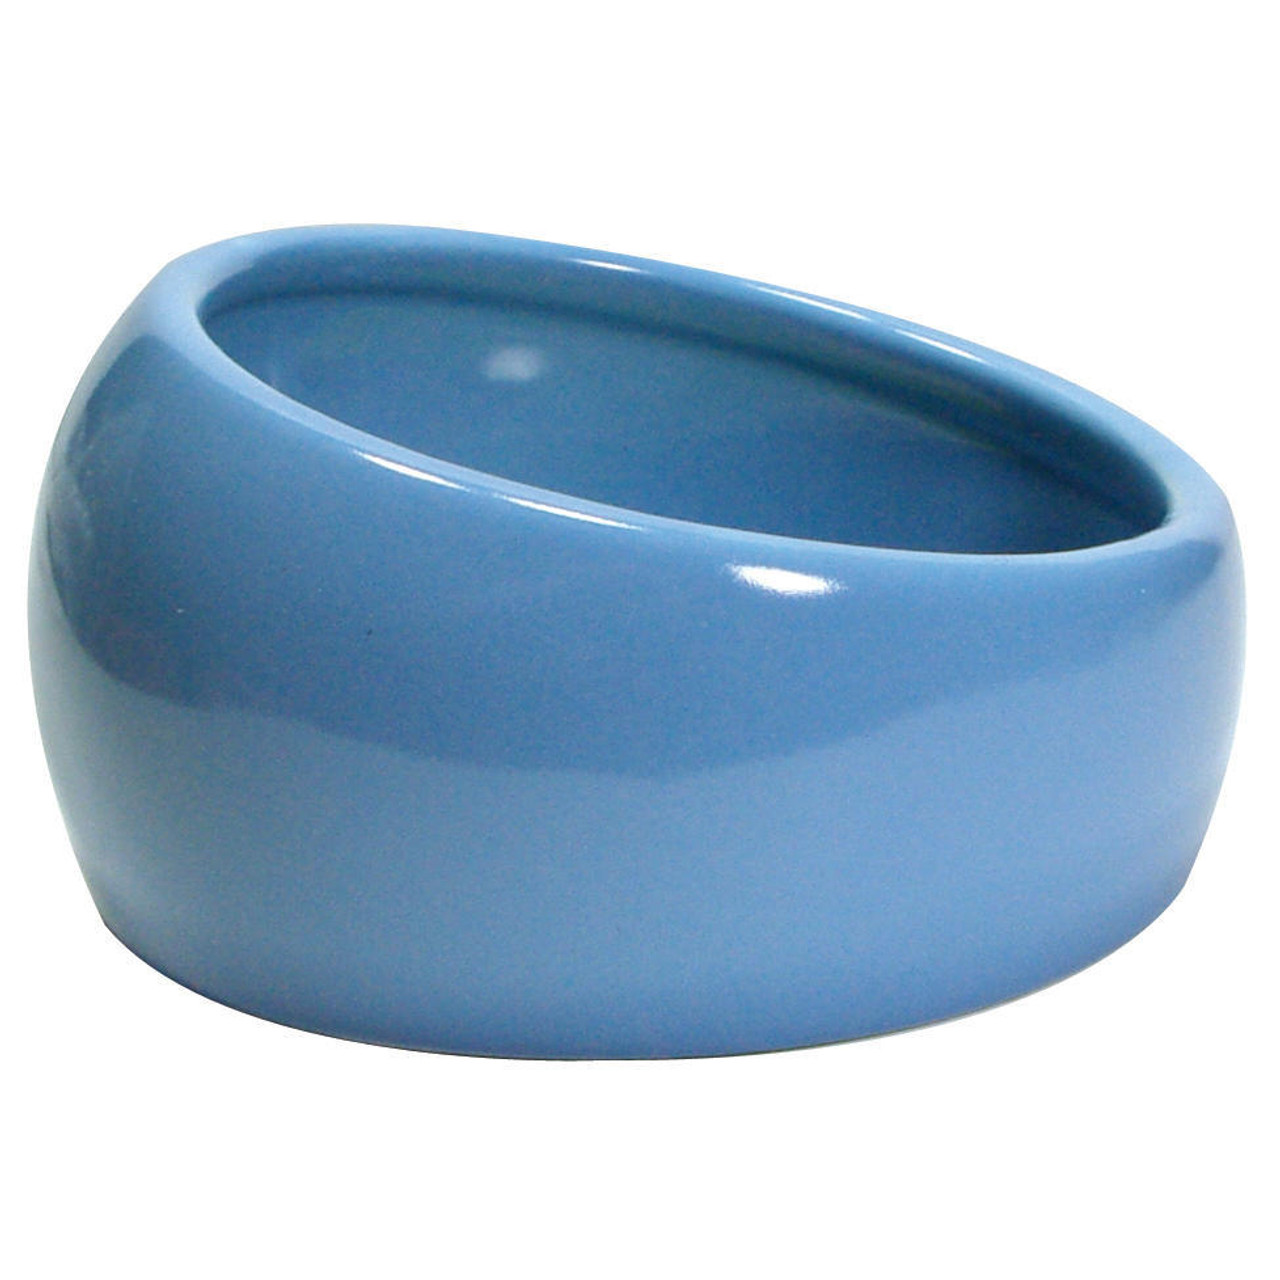 Exo Terra Worm Dish 14oz Blue Ceramic 